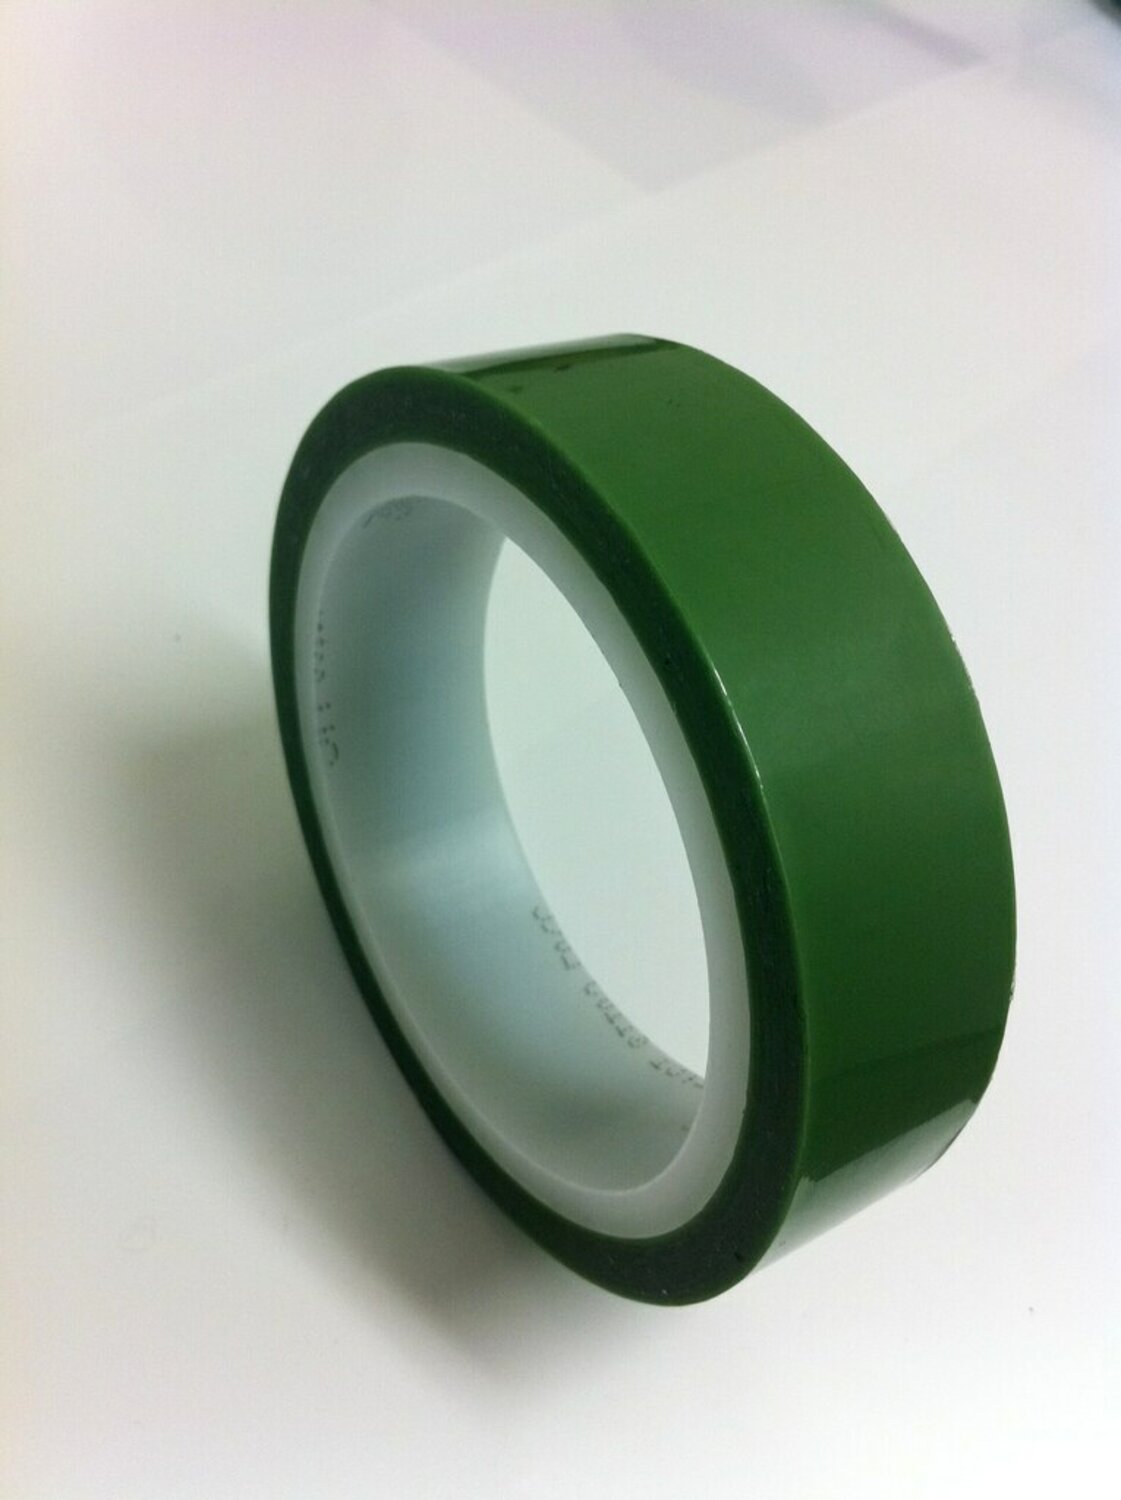 7000123303 - 3M Greenback Printed Circuit Board Tape 851 Green, 2 in x 144 yds x 4.0
mil, 6/Case, Bulk